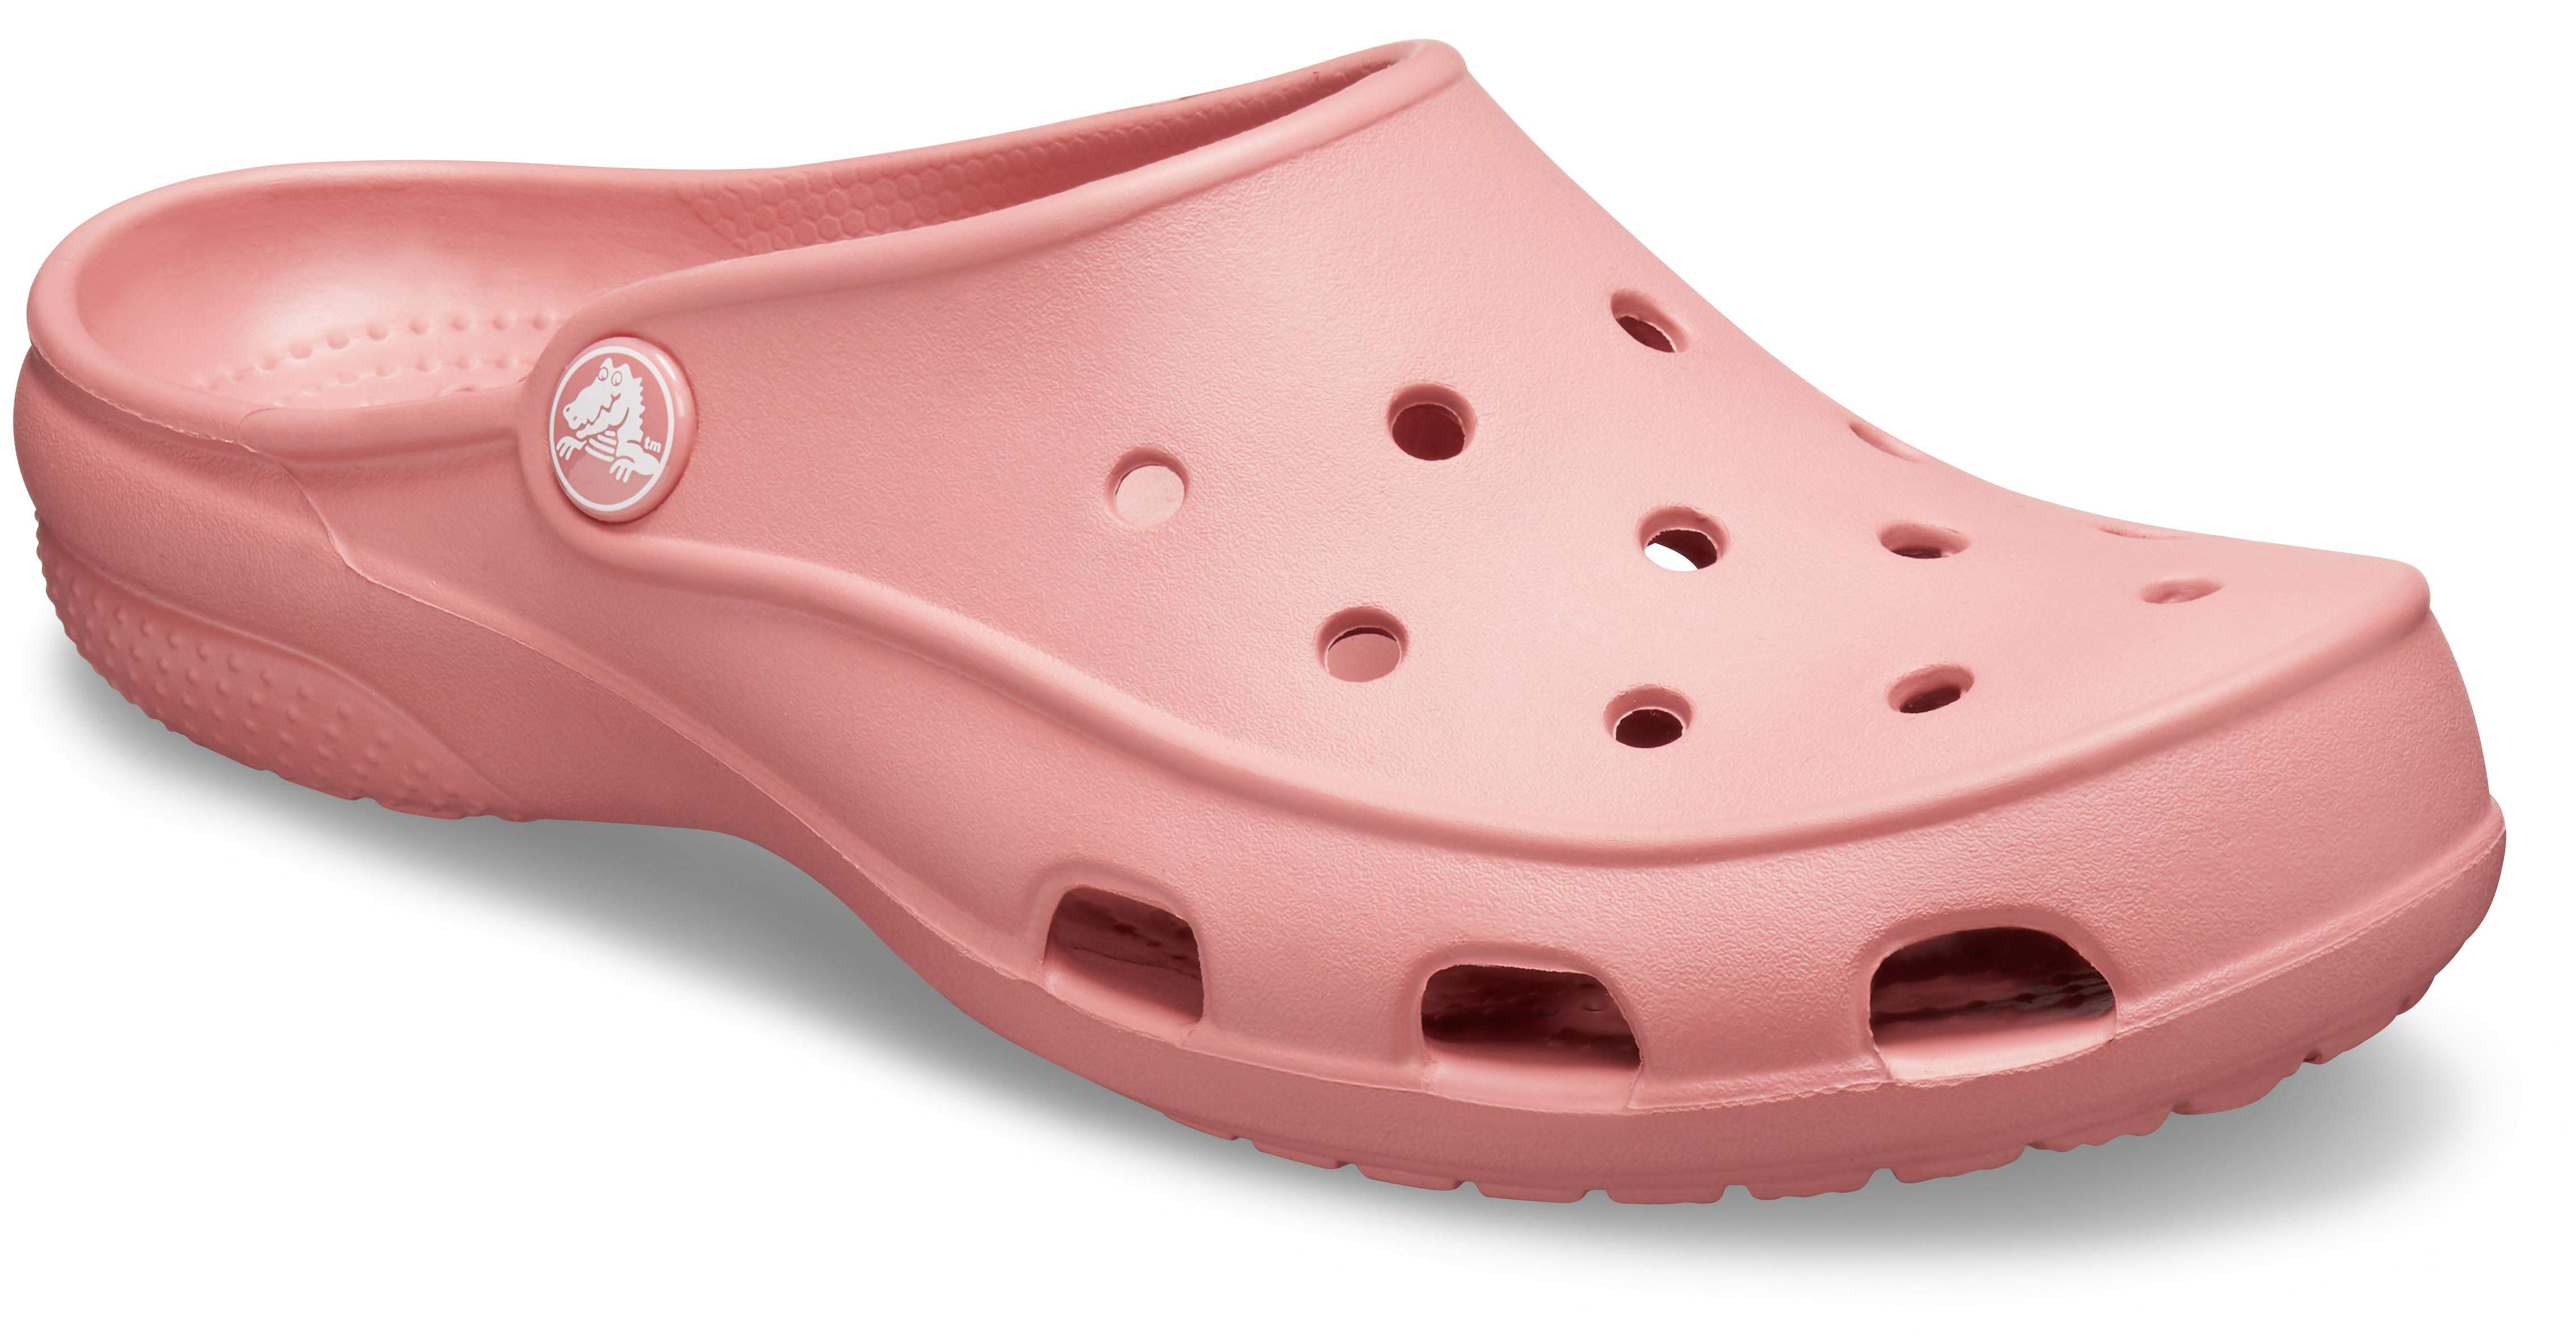 crocs sandals usa